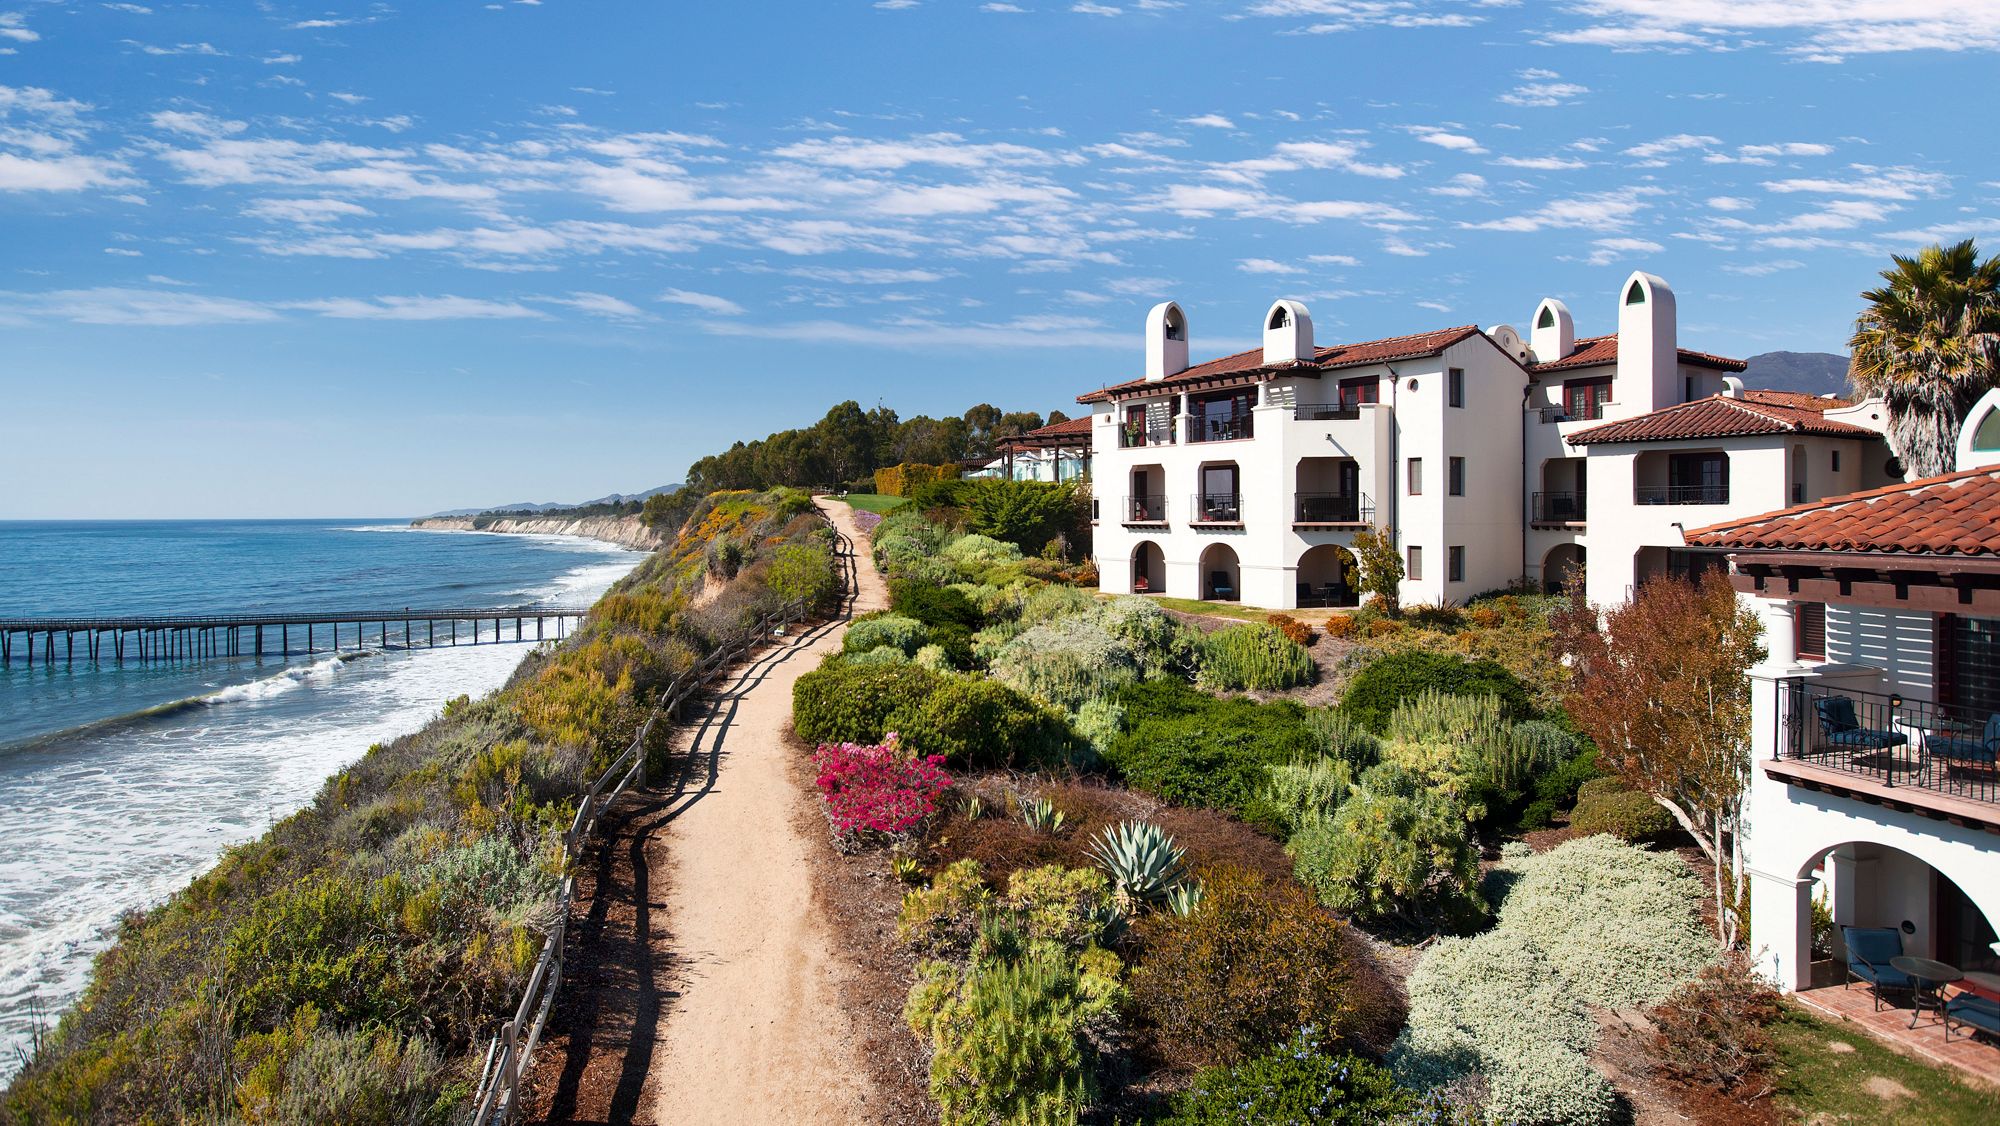 Top 3 Spanish Colonial Style Hotels in Santa Barbara 11